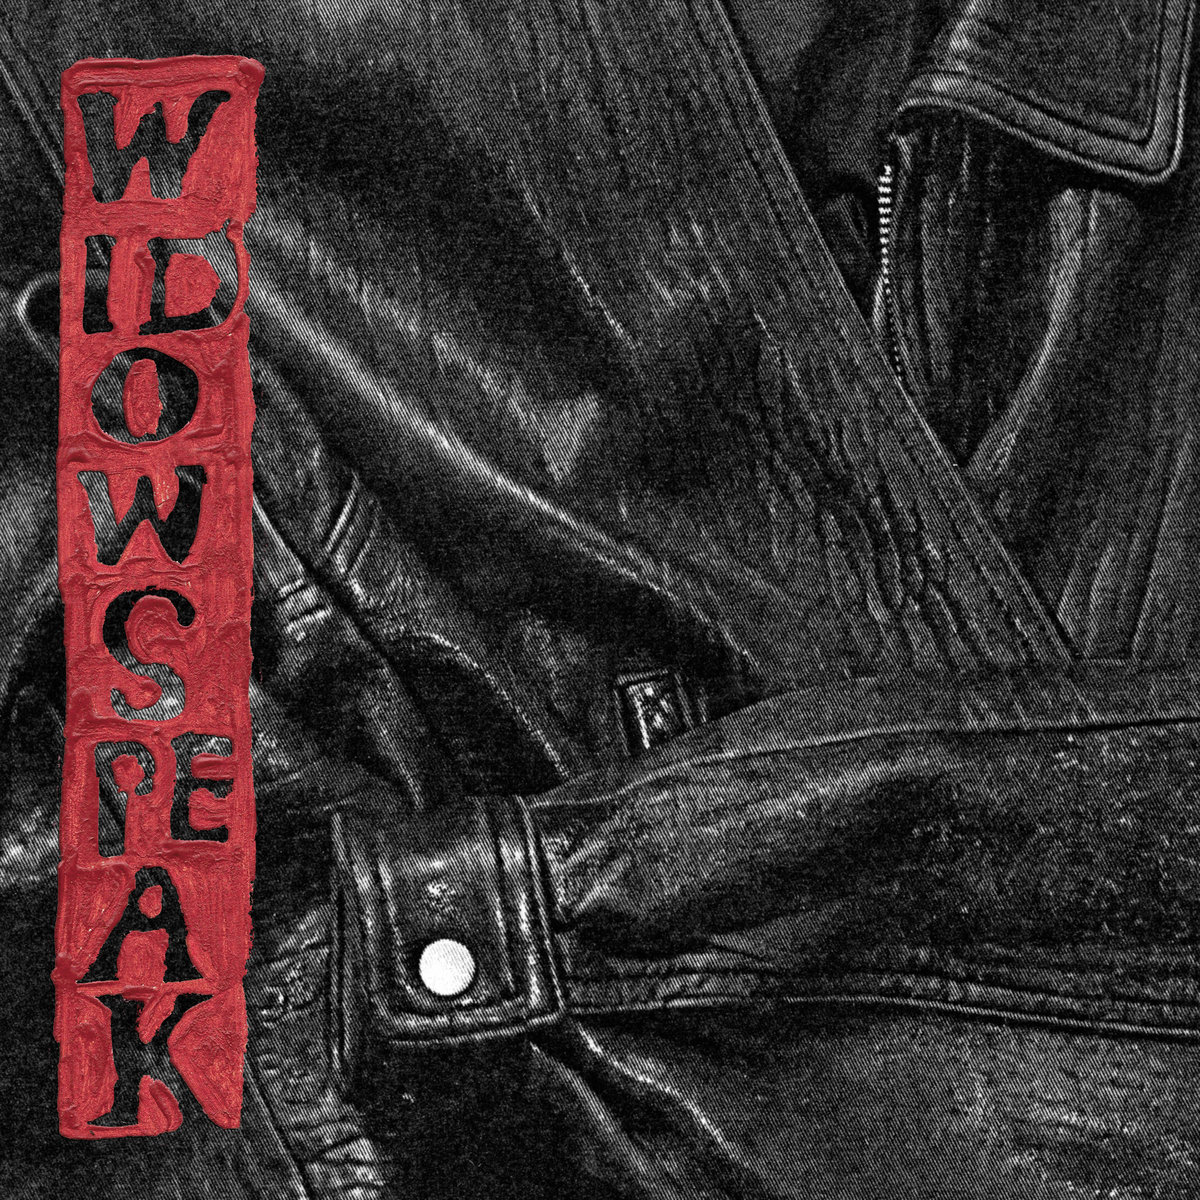 Widowspeak "The Jacket" Colored LP